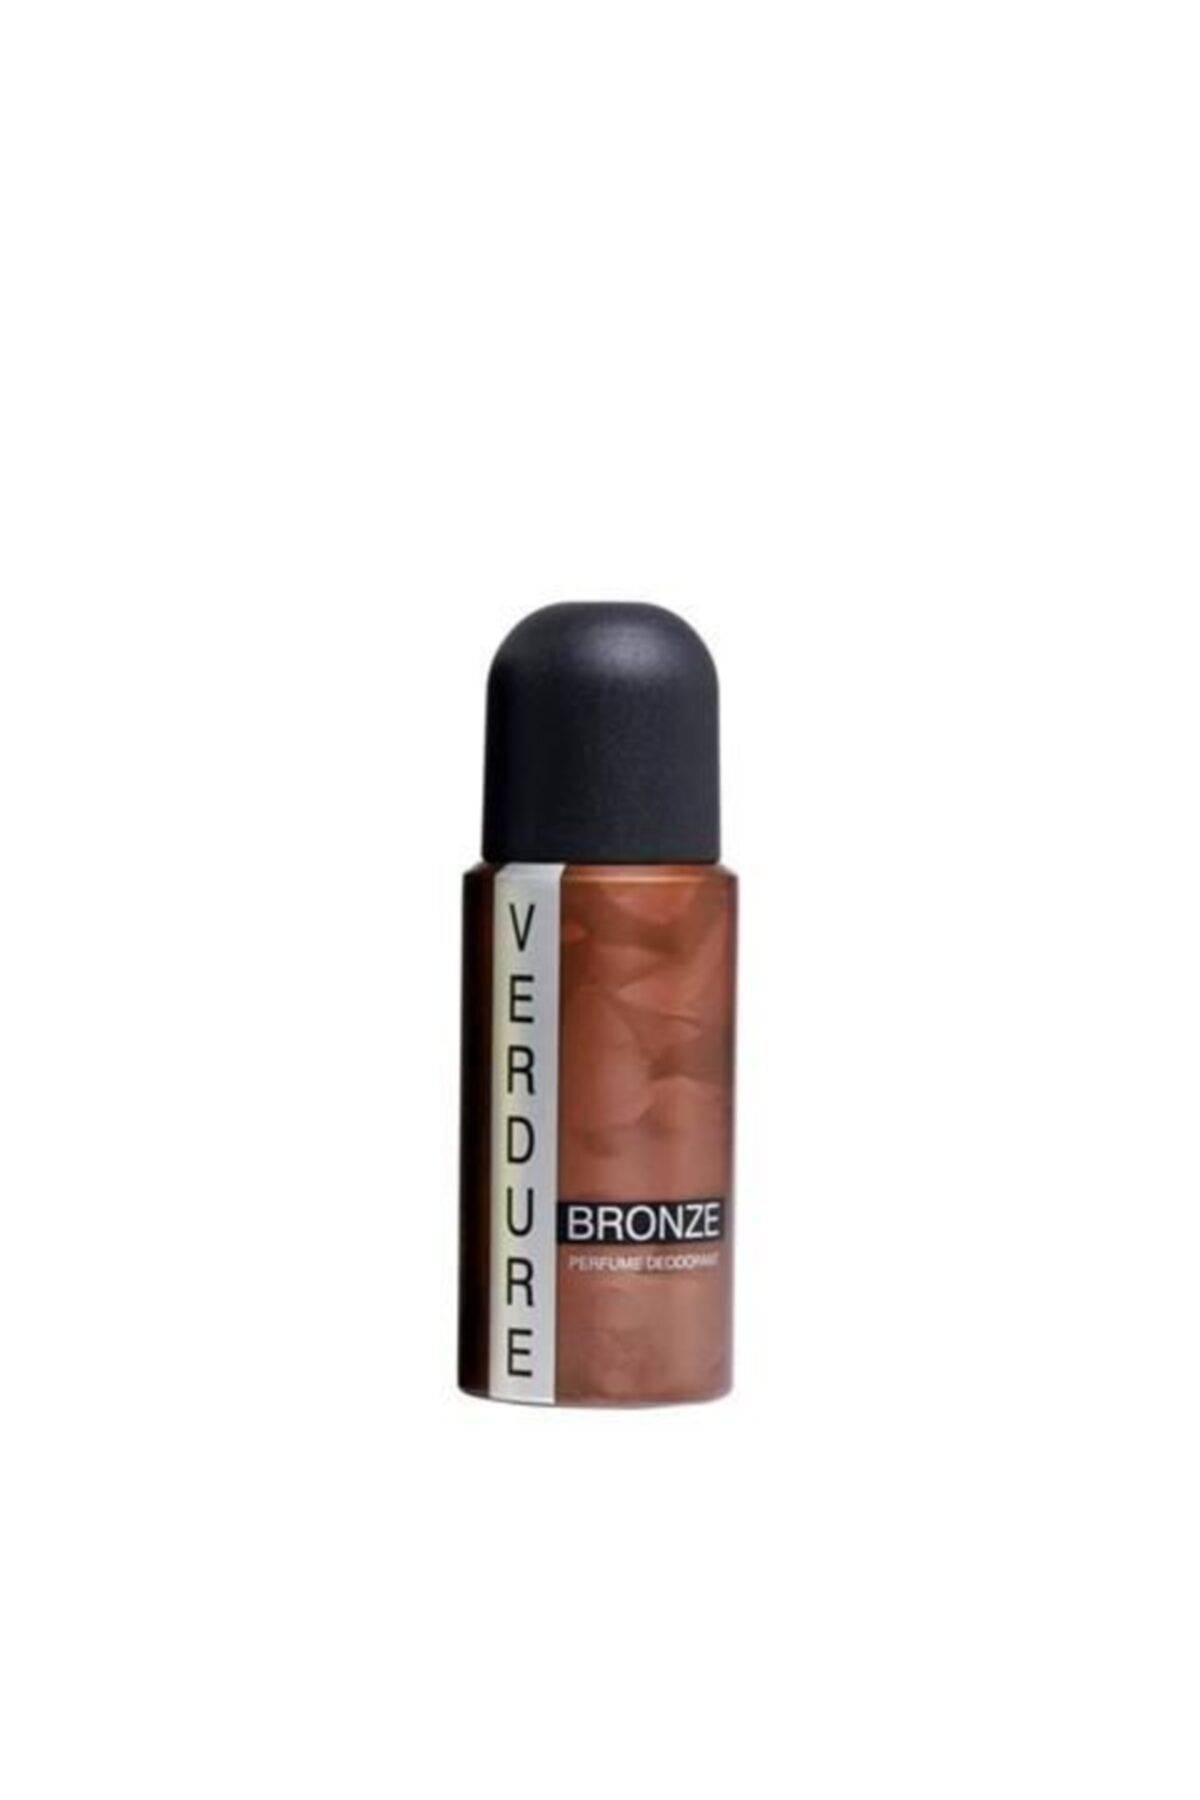 Pereja Verdure Bronze Erkek Deodorant 150 Ml